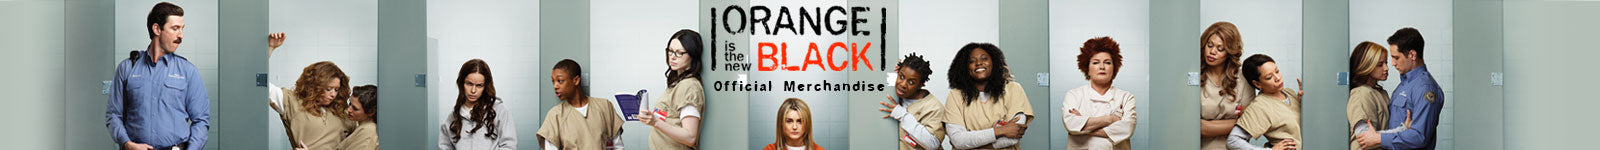 Orange is the New Black banner